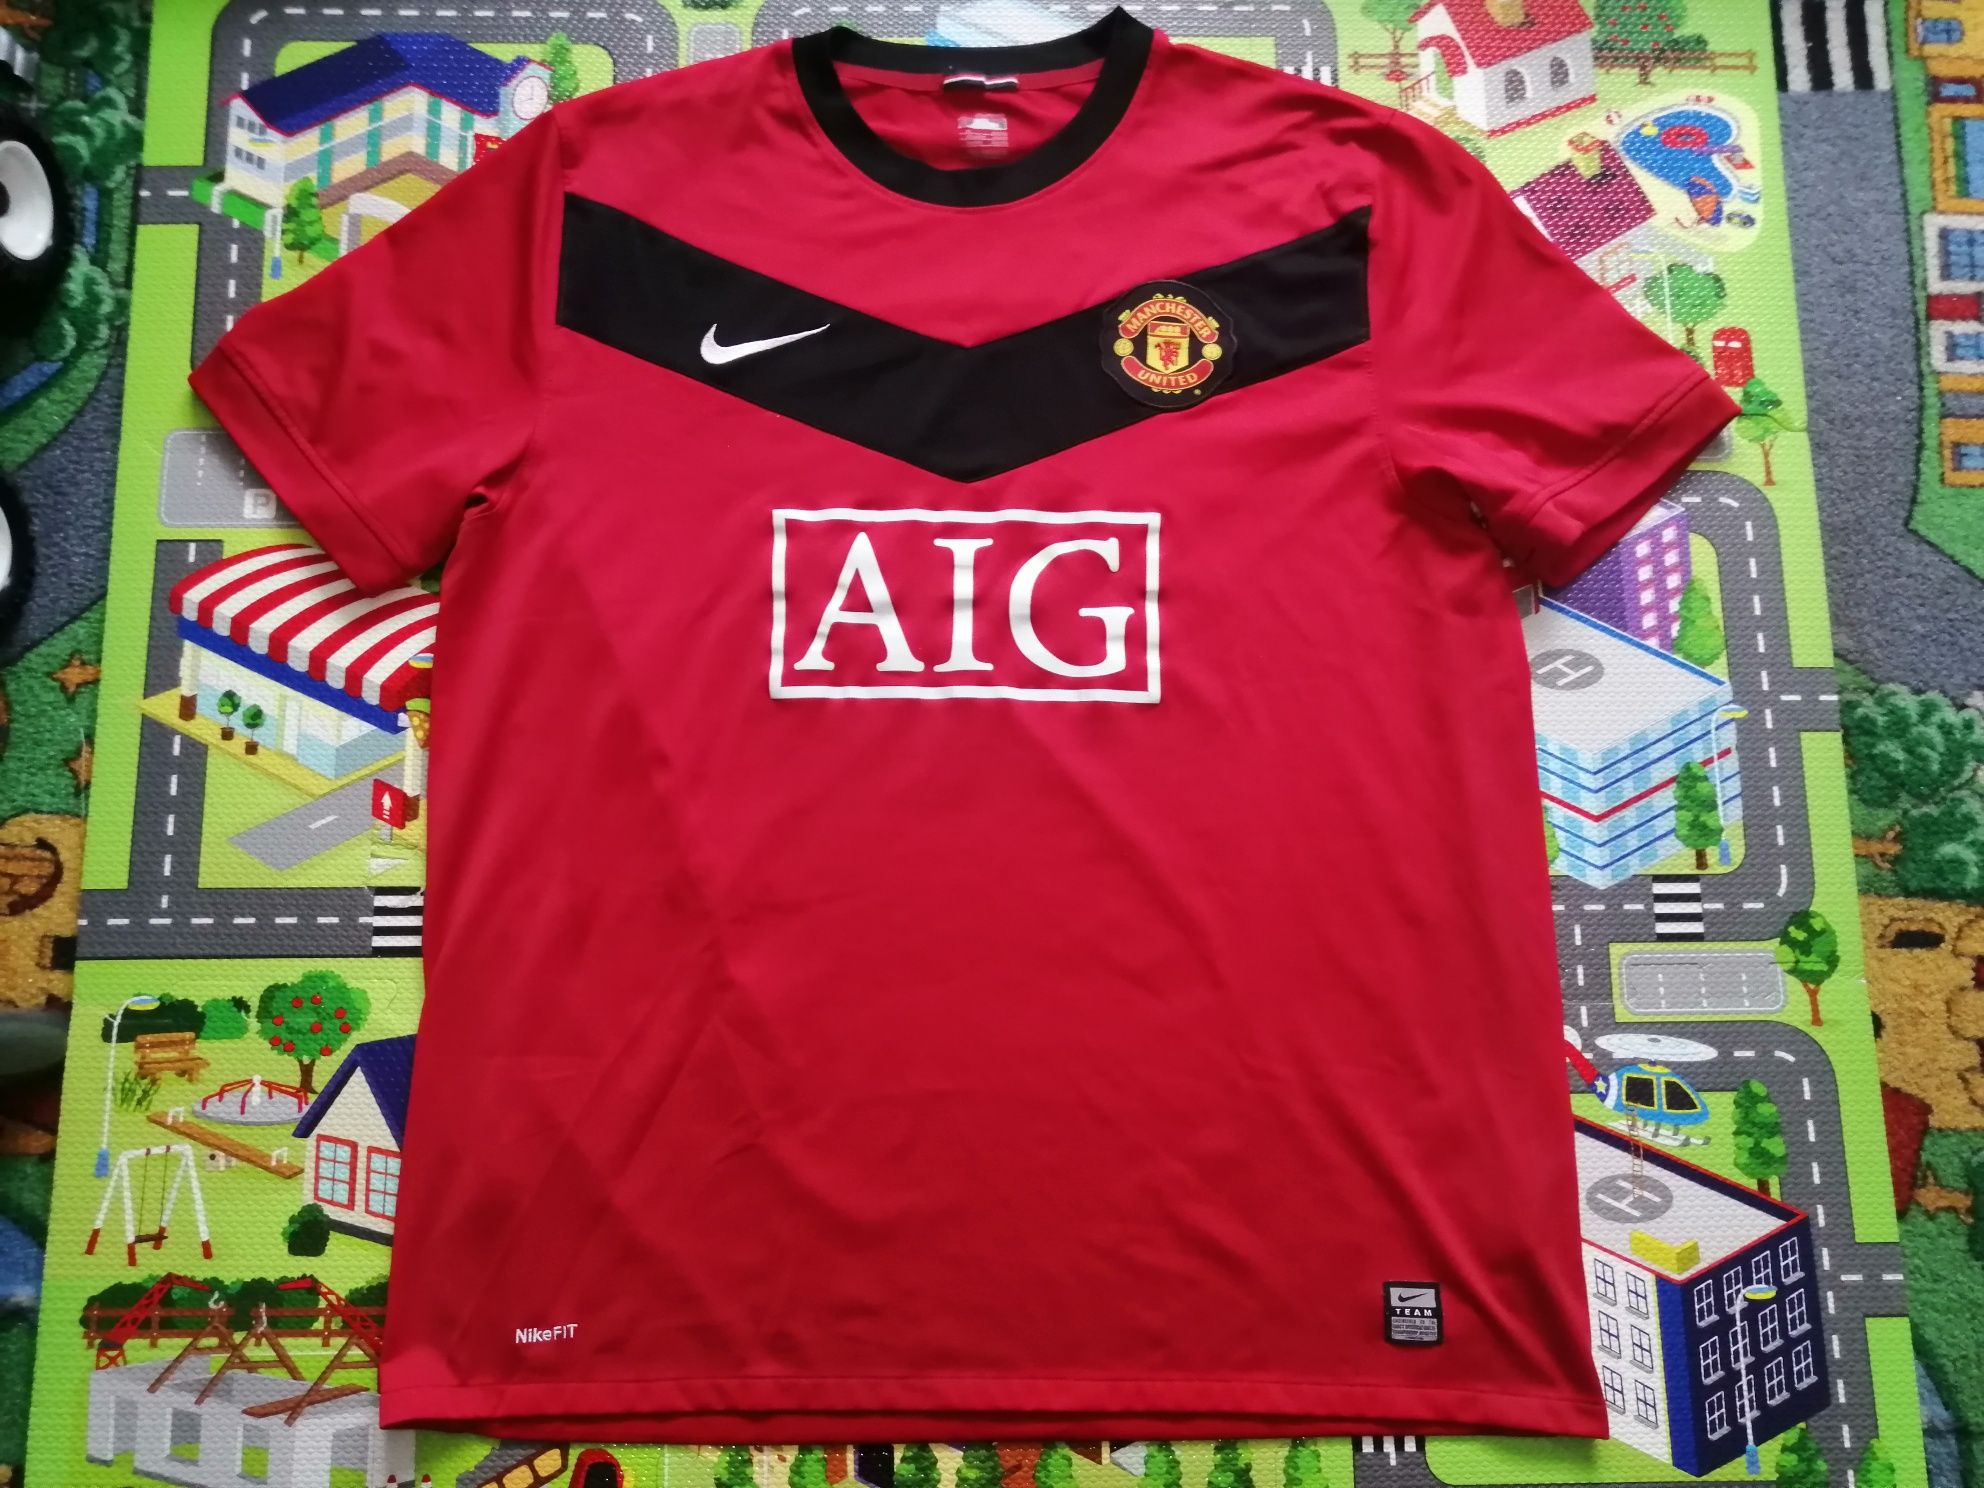 Koszulka sportowa męska nike Manchester United Slijkhuis Rozmiar XL